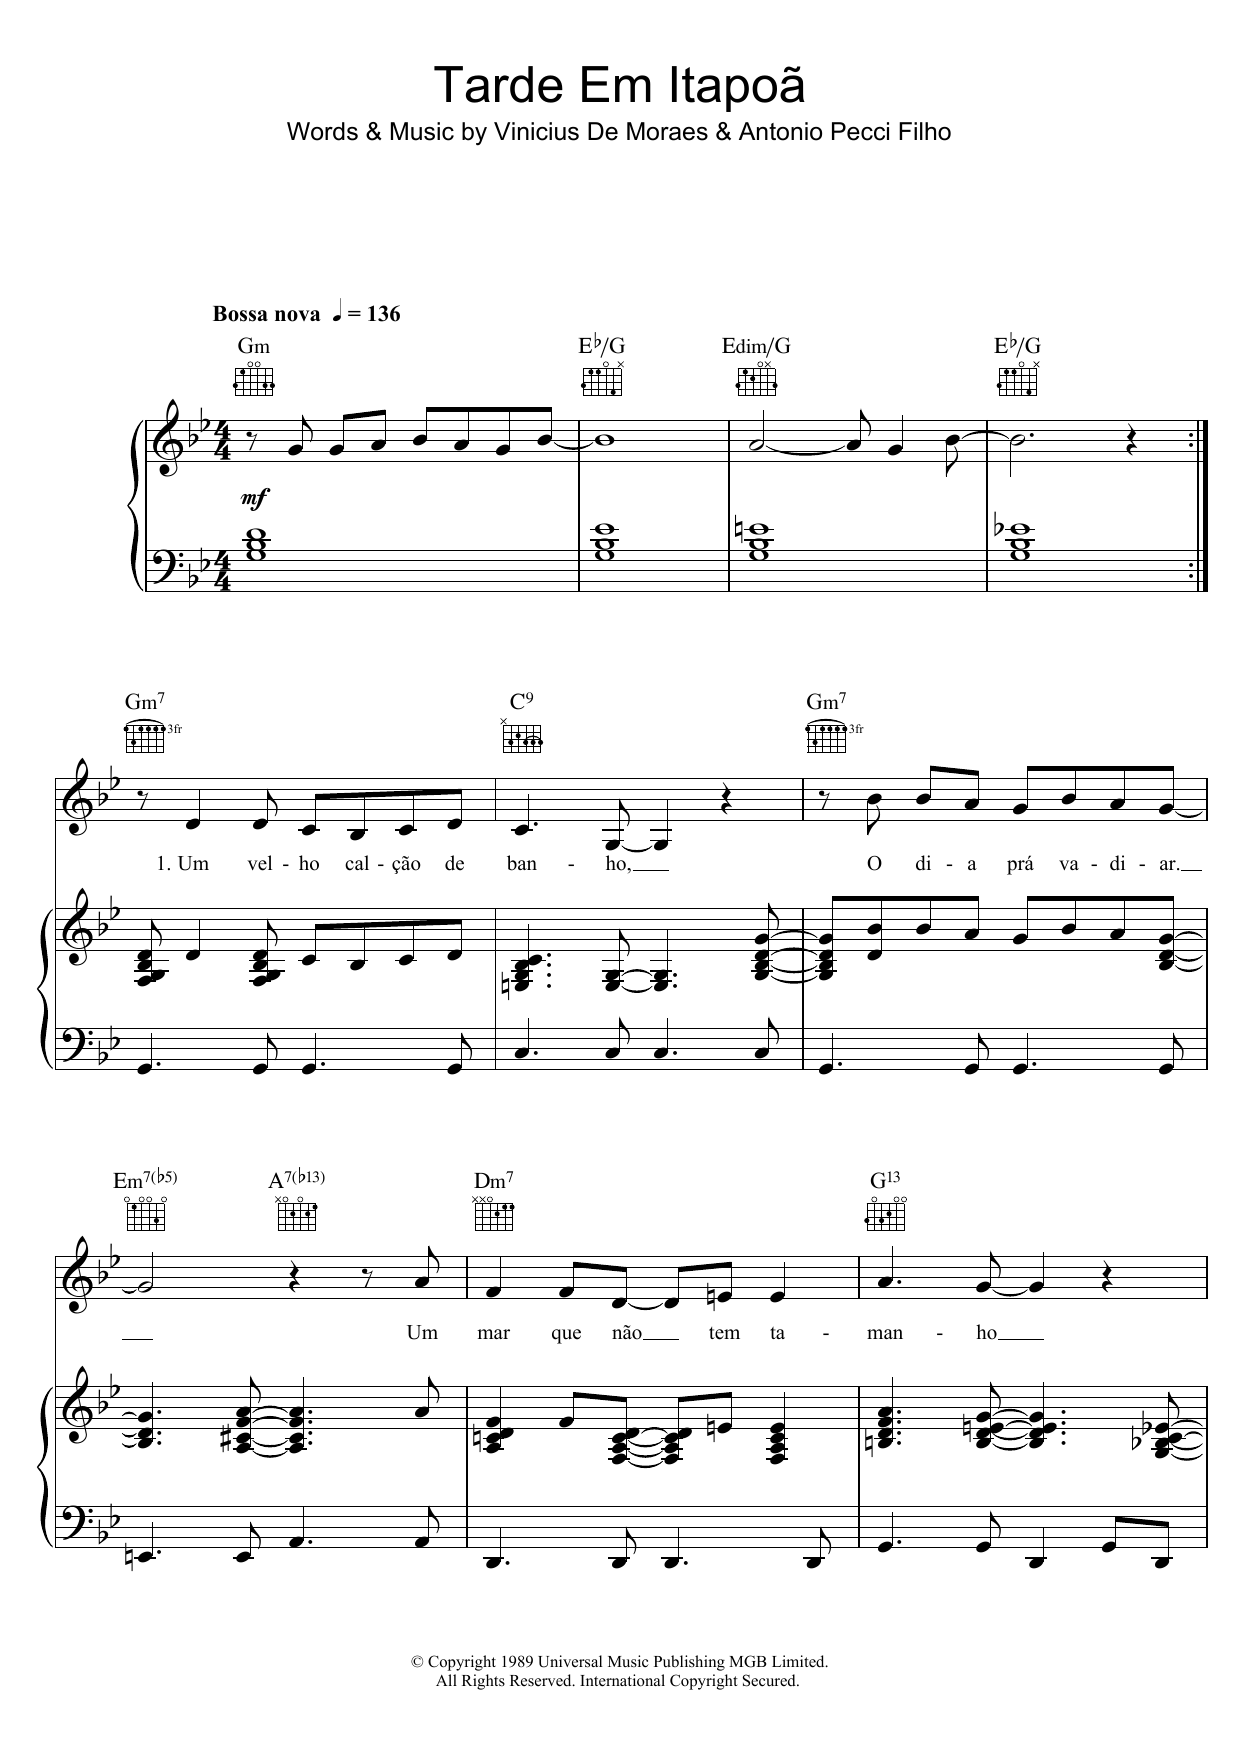 Vinicius de Moraes Tarde Em Itapoa Sheet Music Notes & Chords for Piano, Vocal & Guitar (Right-Hand Melody) - Download or Print PDF